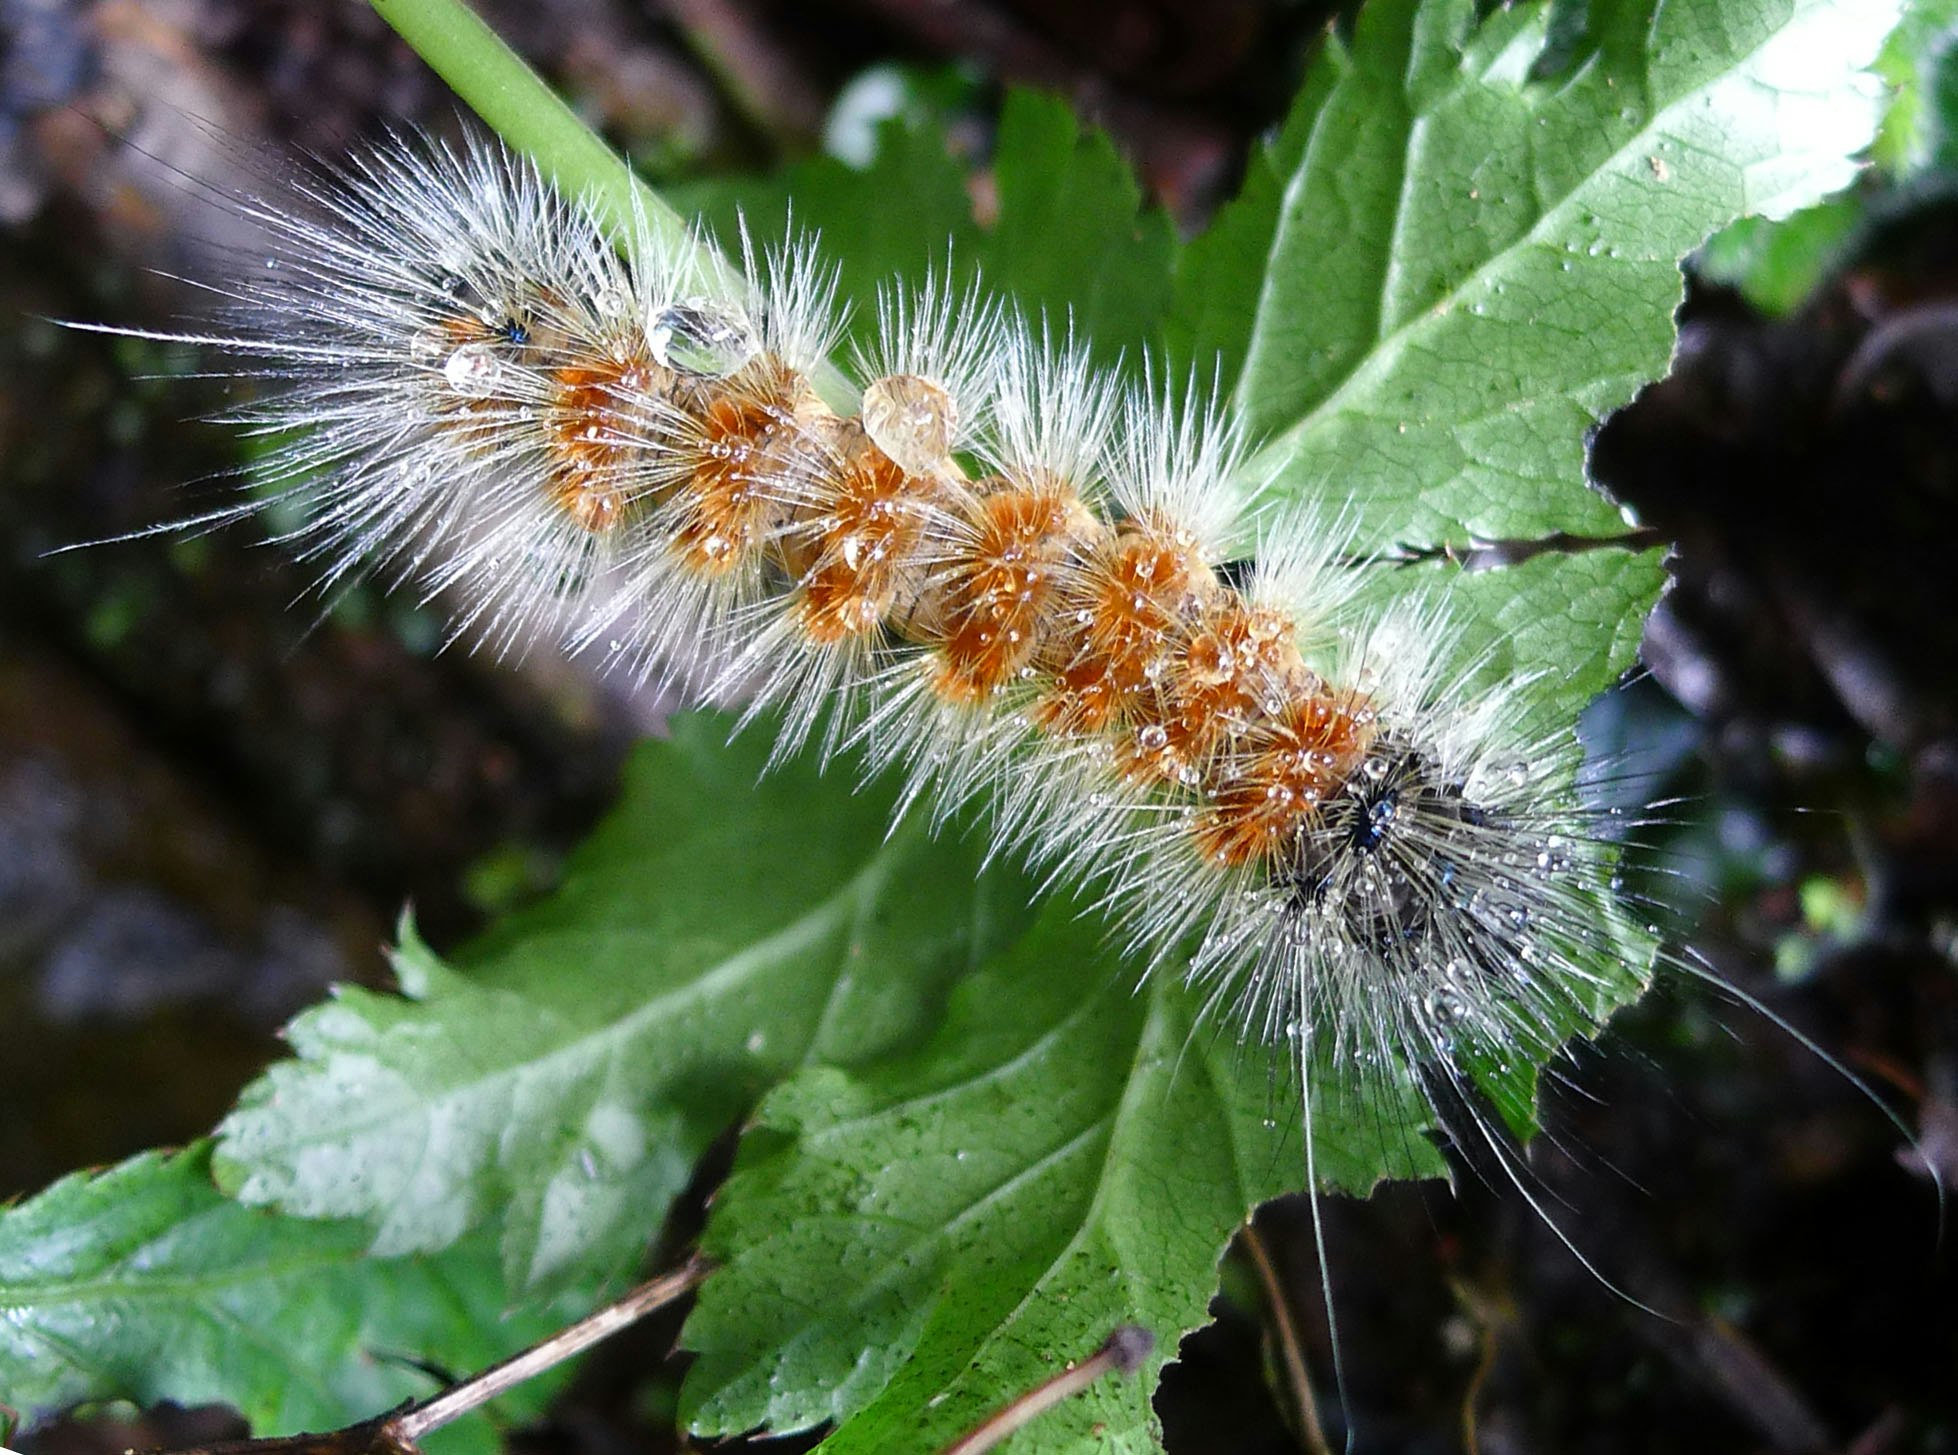 Caterpillar Costa Rica